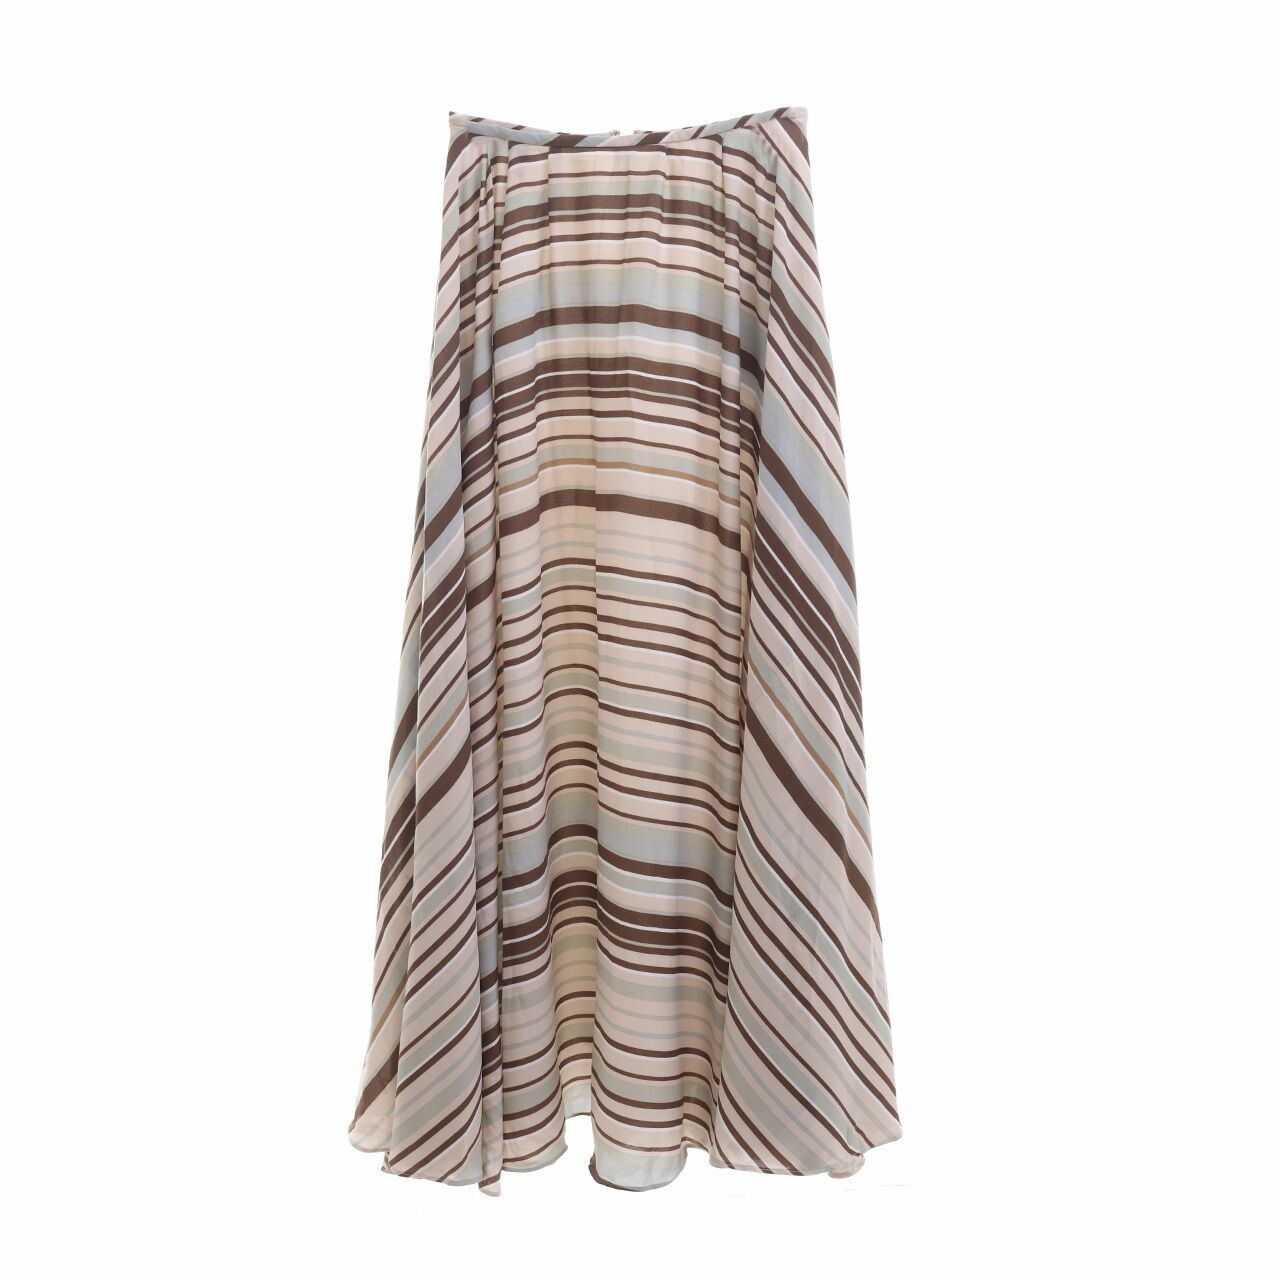 ALLEA Itang Yunasz Multi Stripes Maxi Skirt